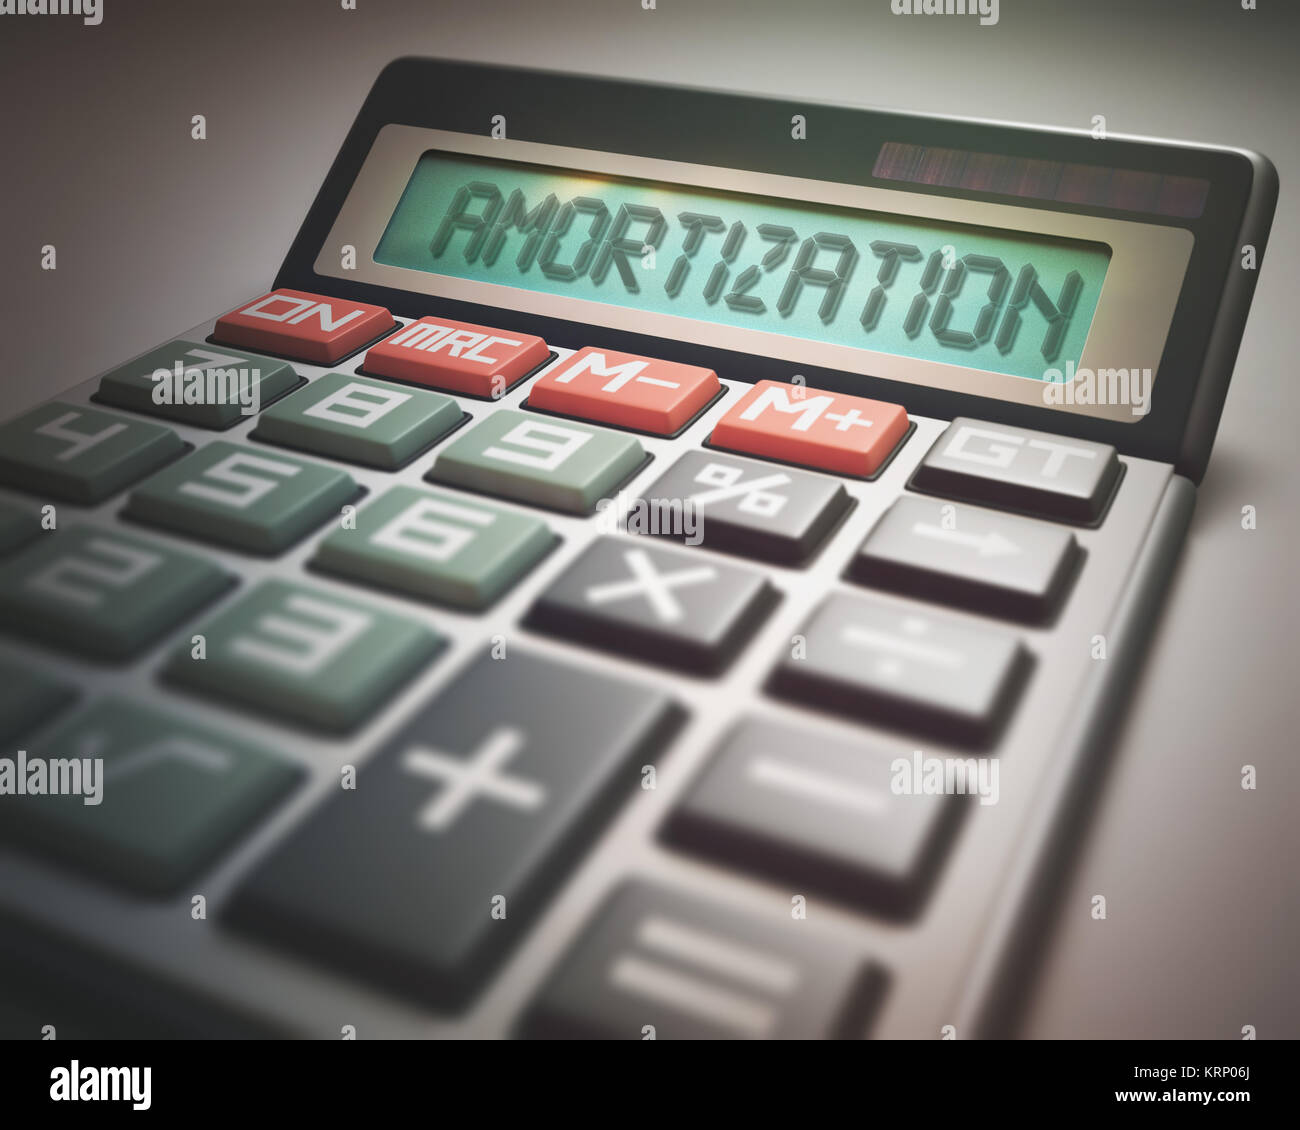 Amortization Calculator Stock Photo